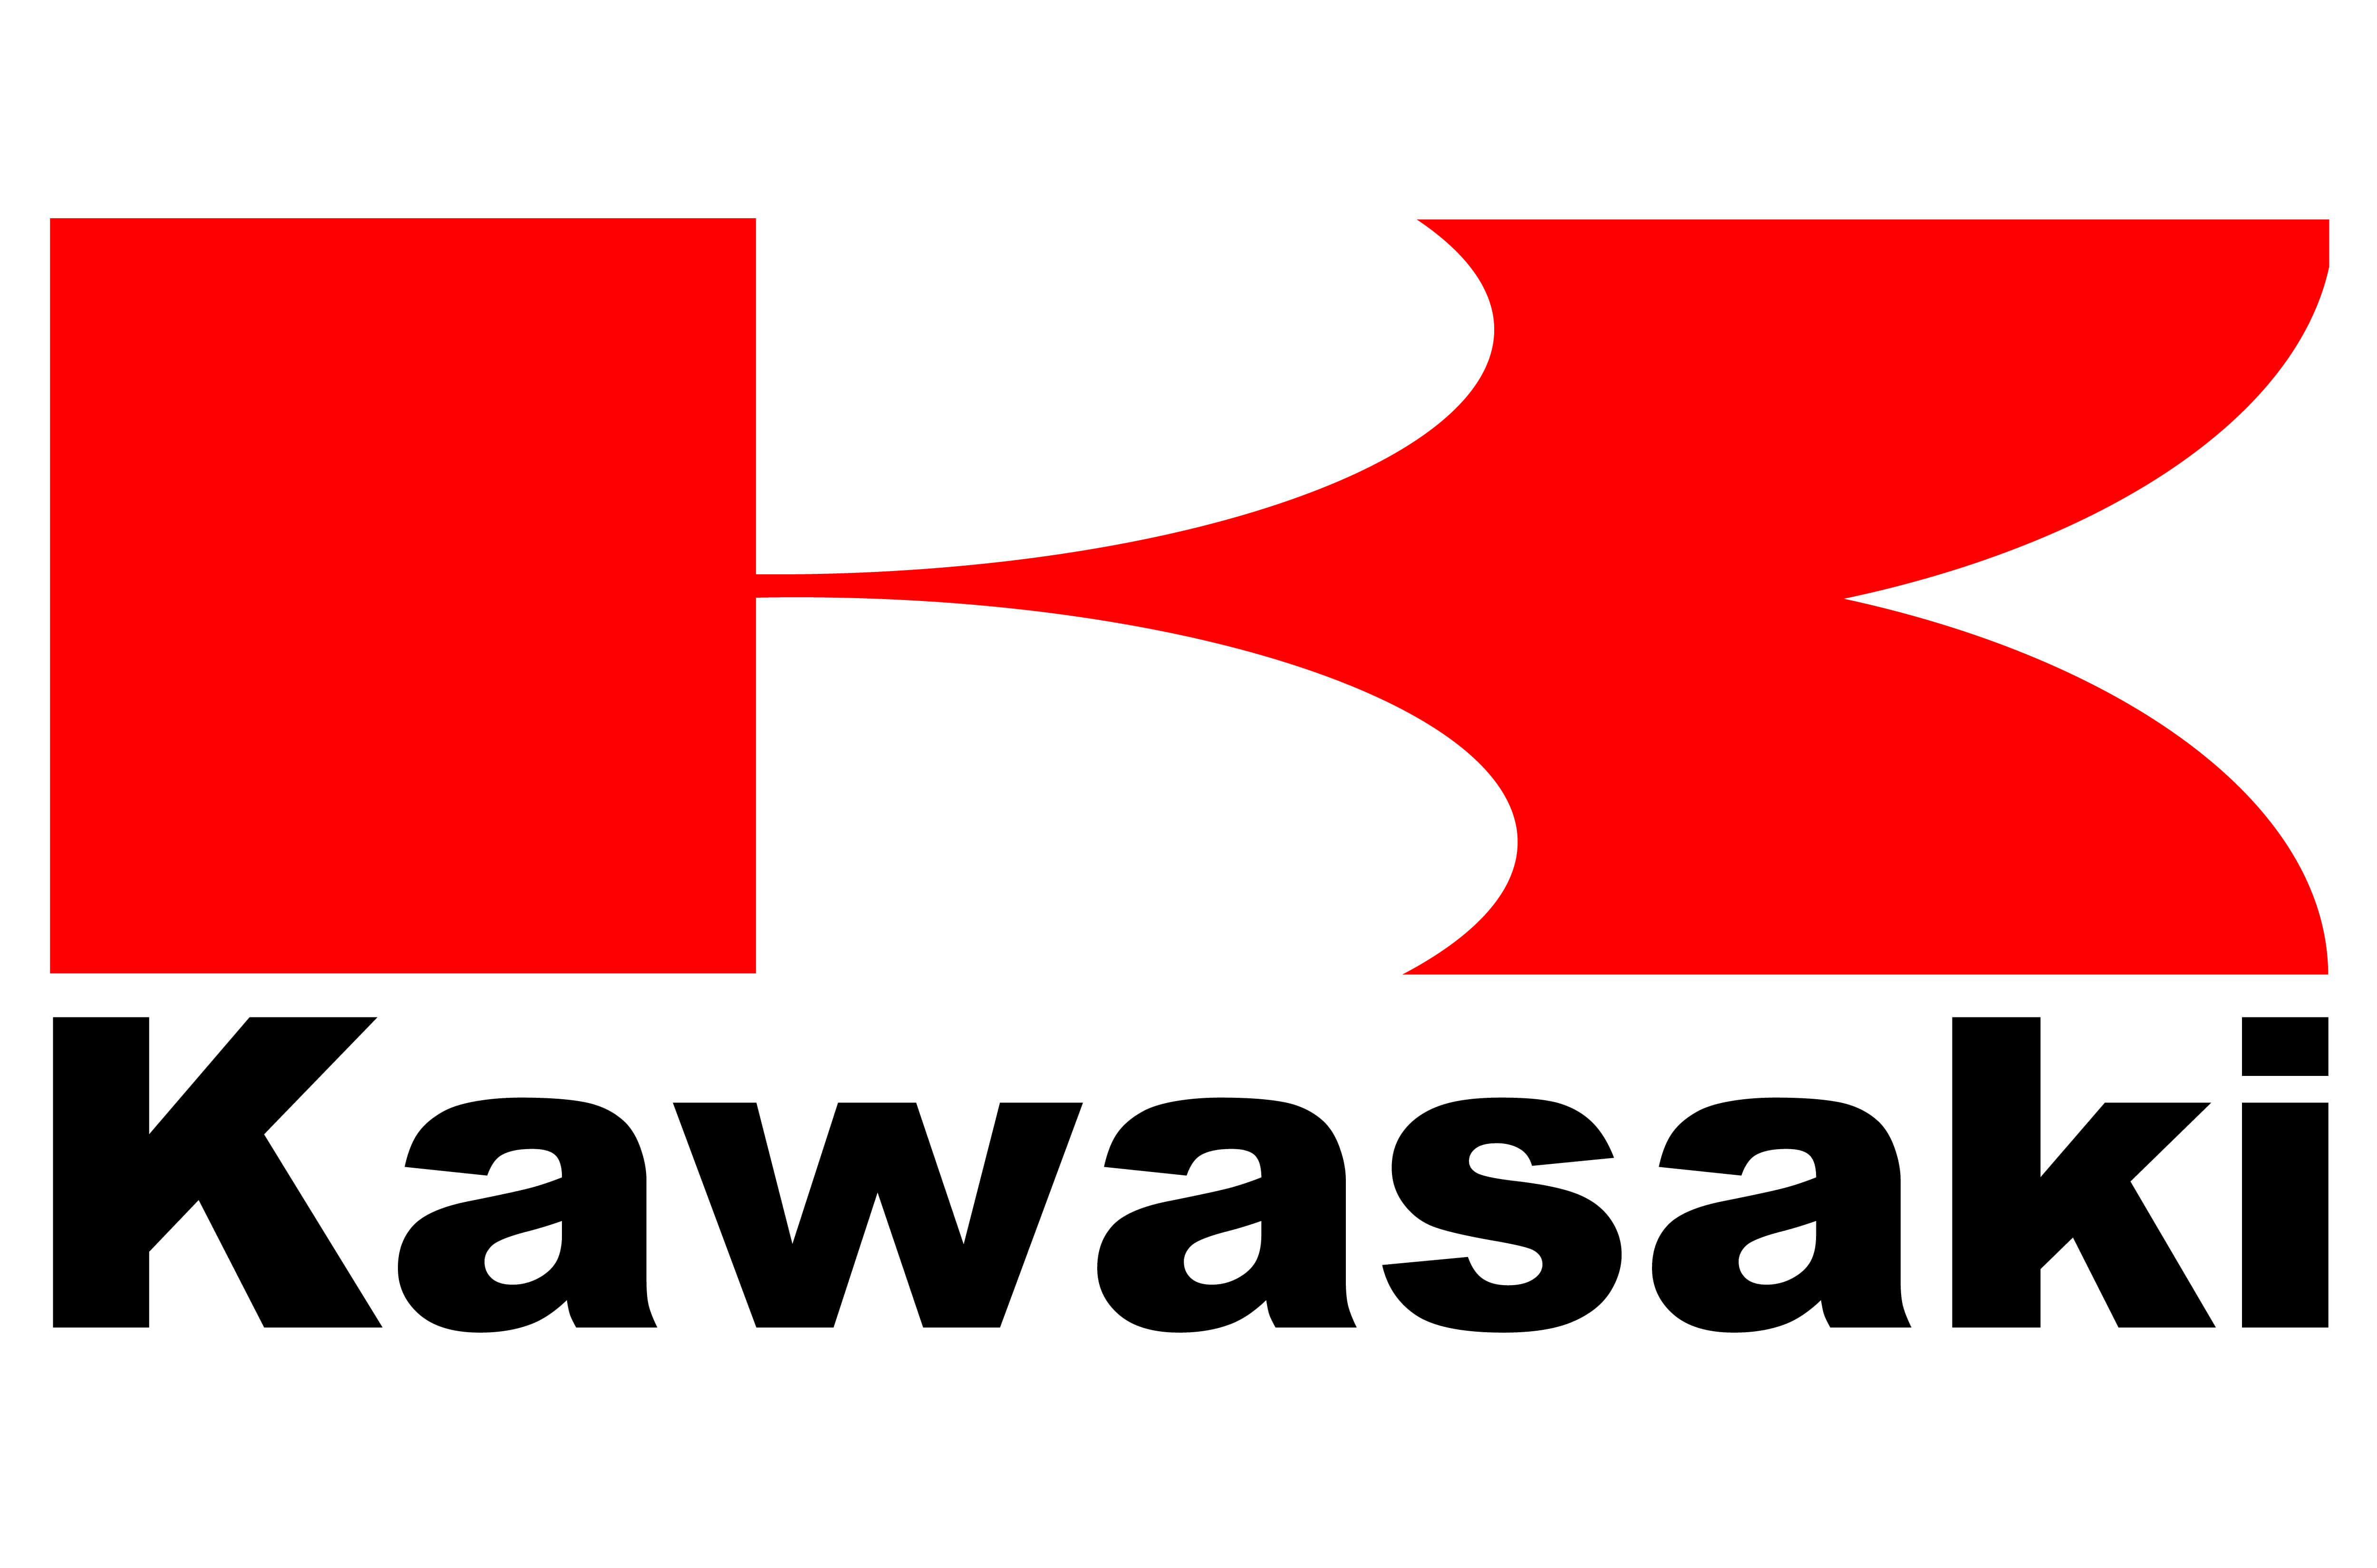 Red Black and White Logo - Kawasaki logo | Motorcycle Brands